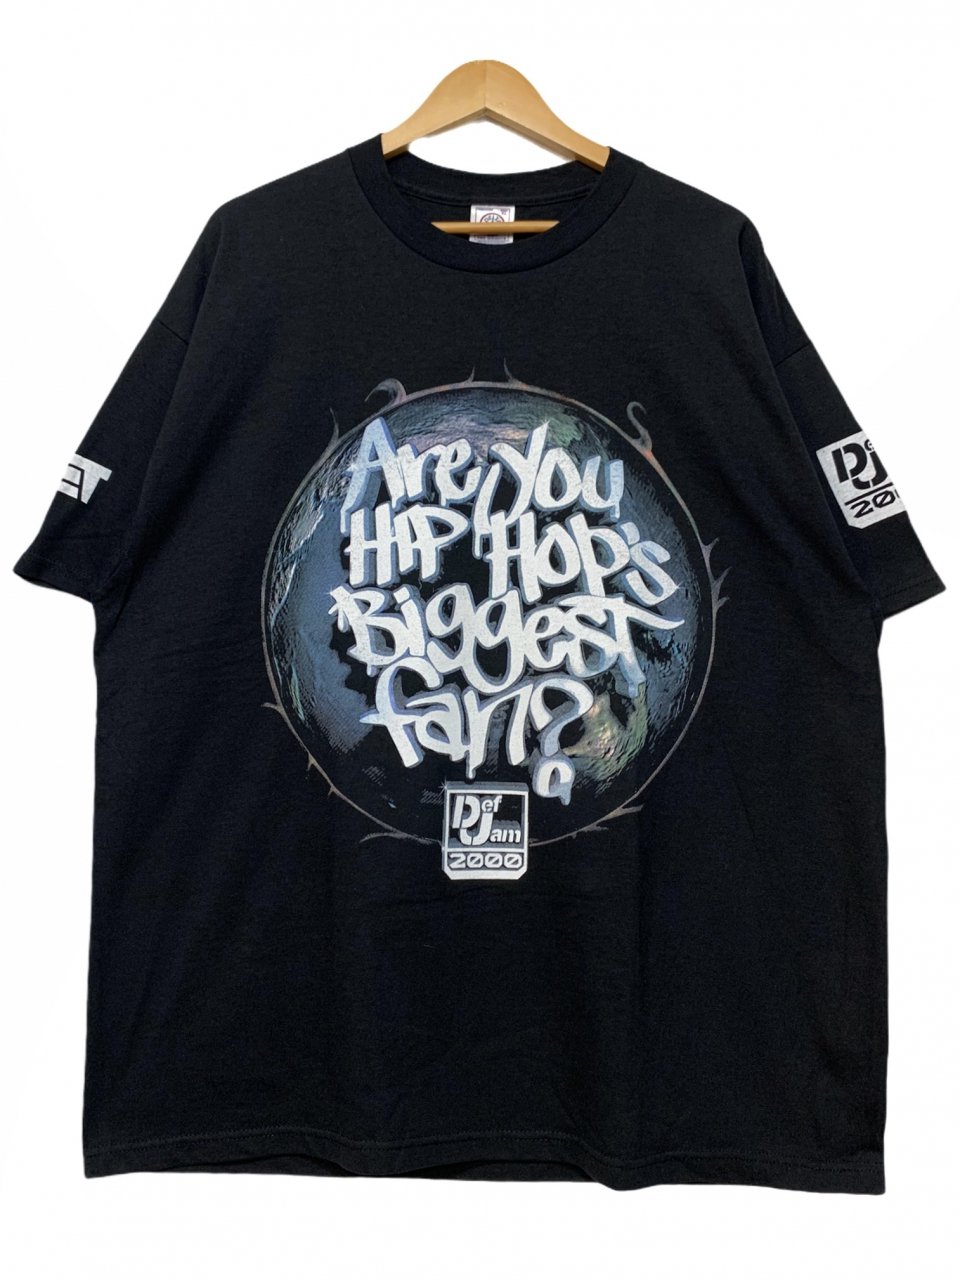 DEF JAMコンピアルバム Biggest Fan Tシャツ【24年前】Used - www.gcnm.edu.gh